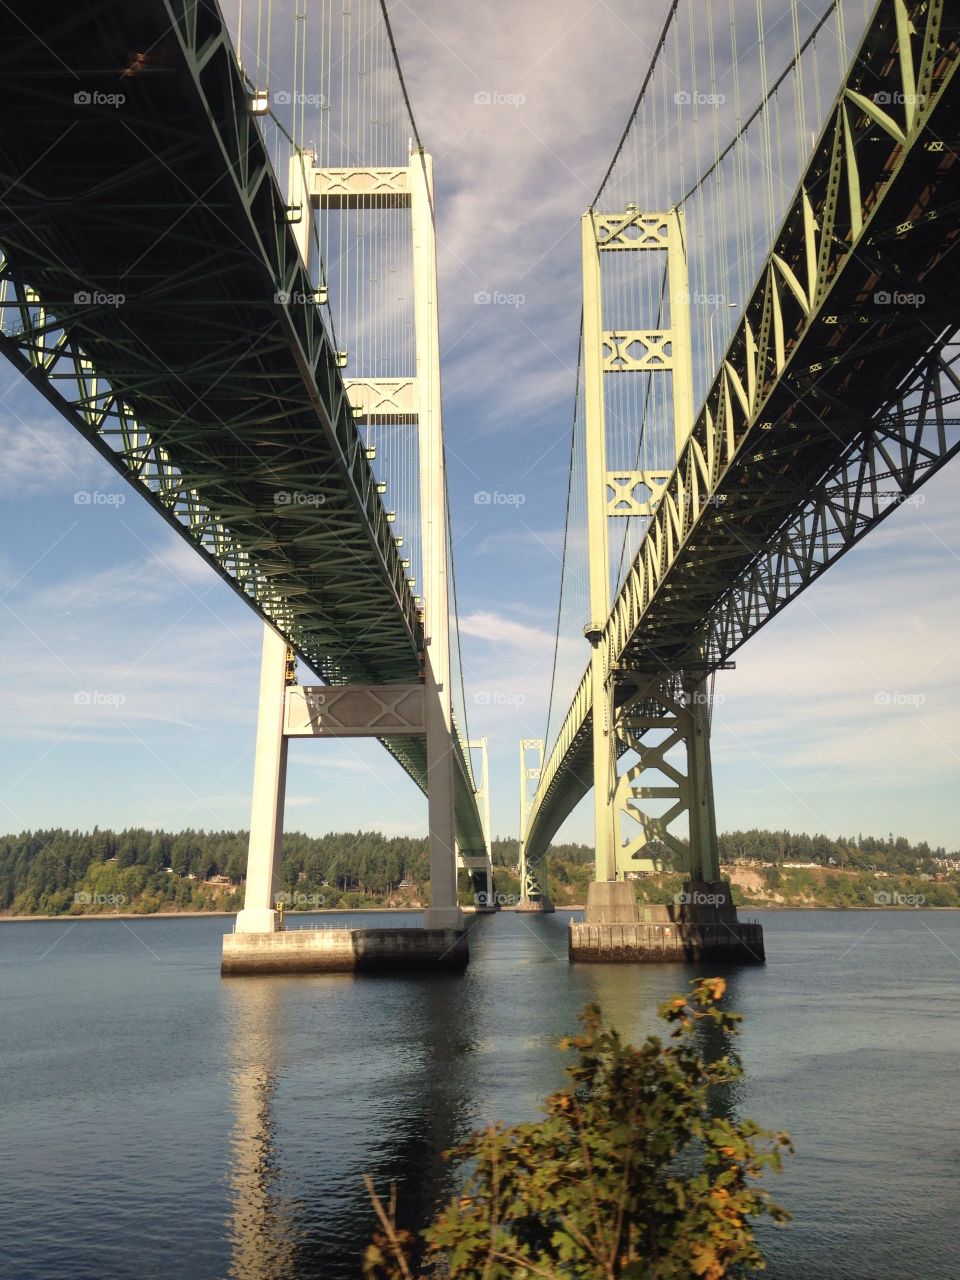 The bridge in Washington state, USA